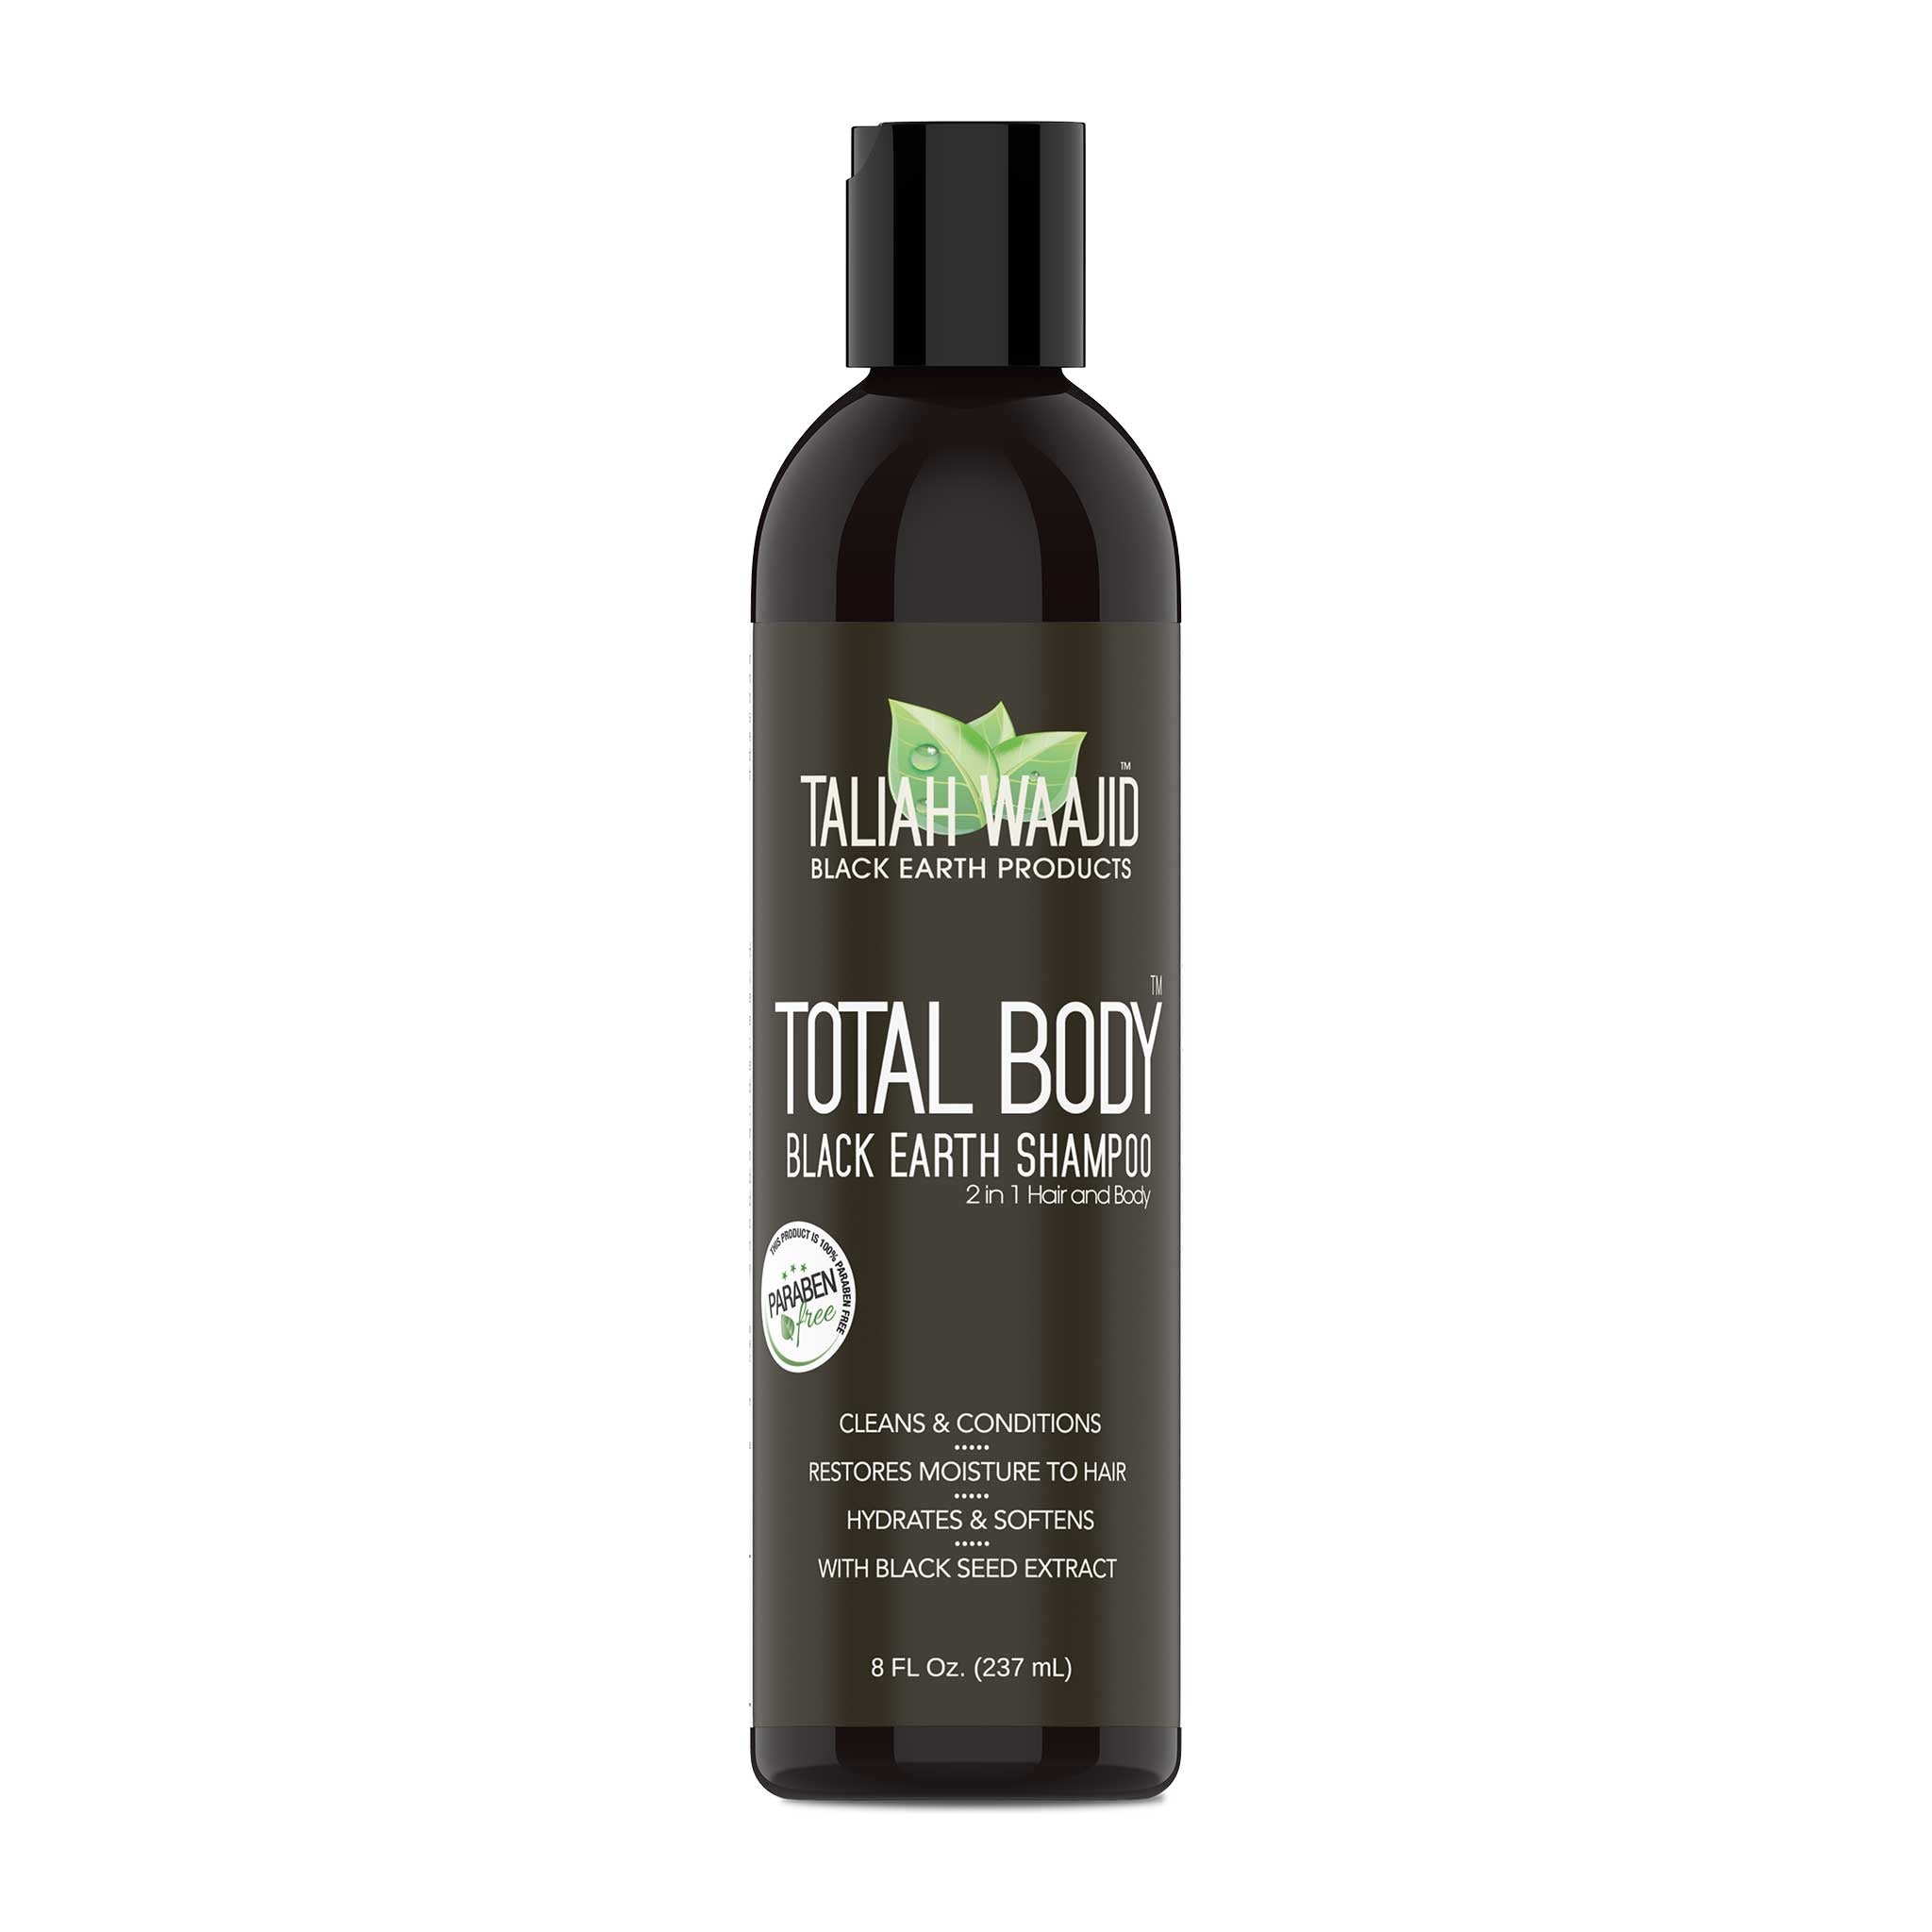 Black Earth Products Total Body Black Earth Shampoo 8oz